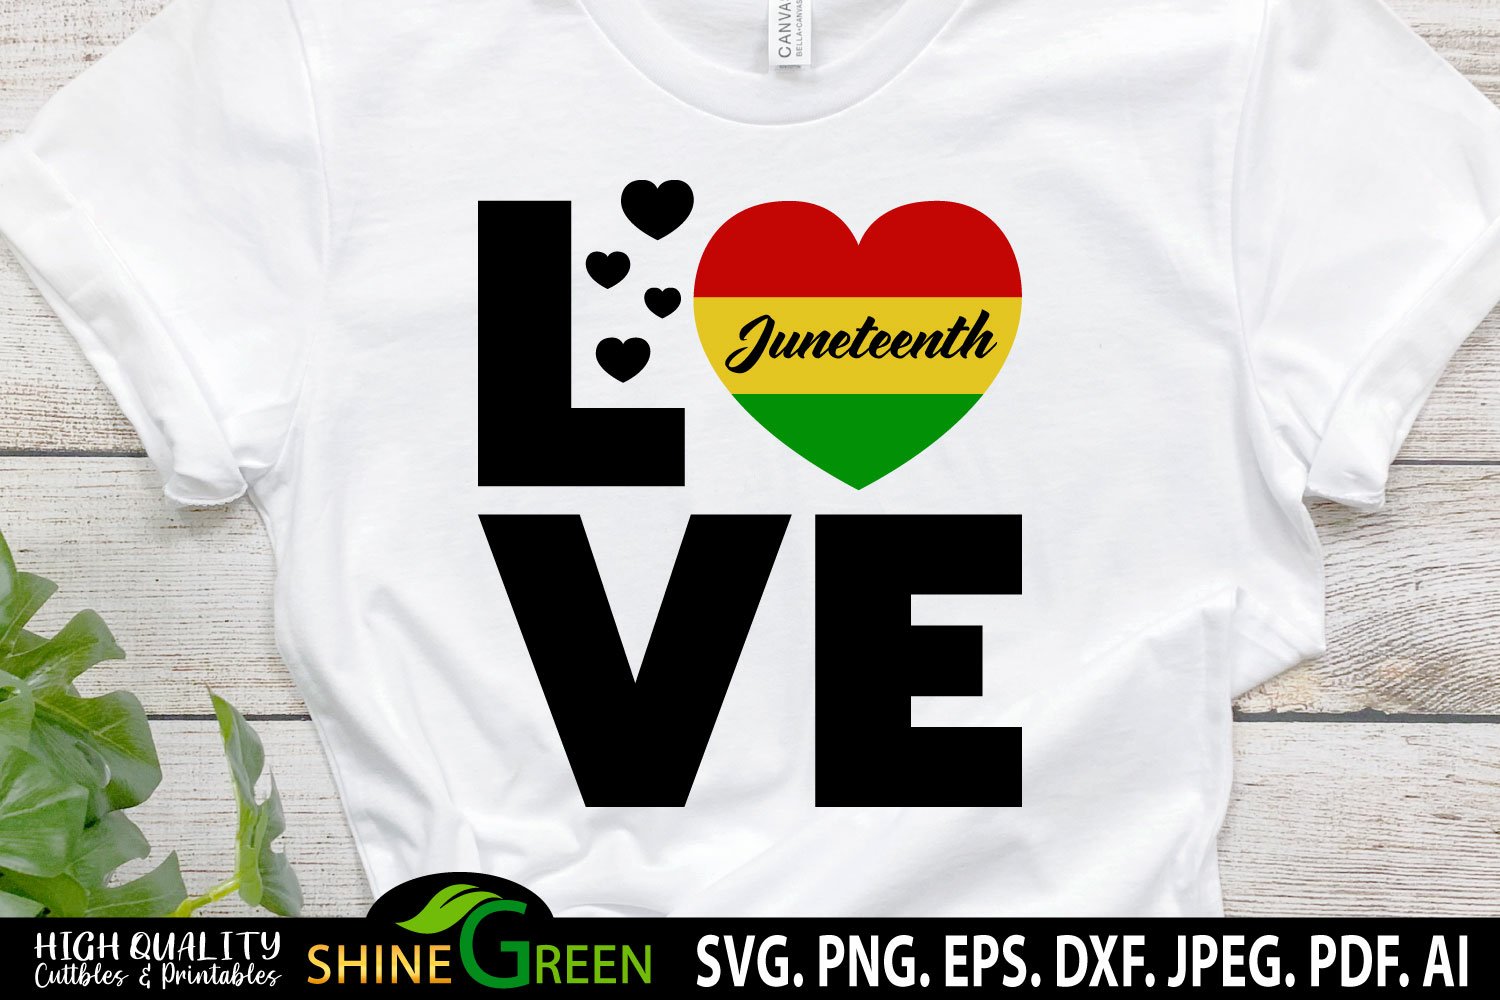 Love juneteenth colorful print by shine green studio shirt.